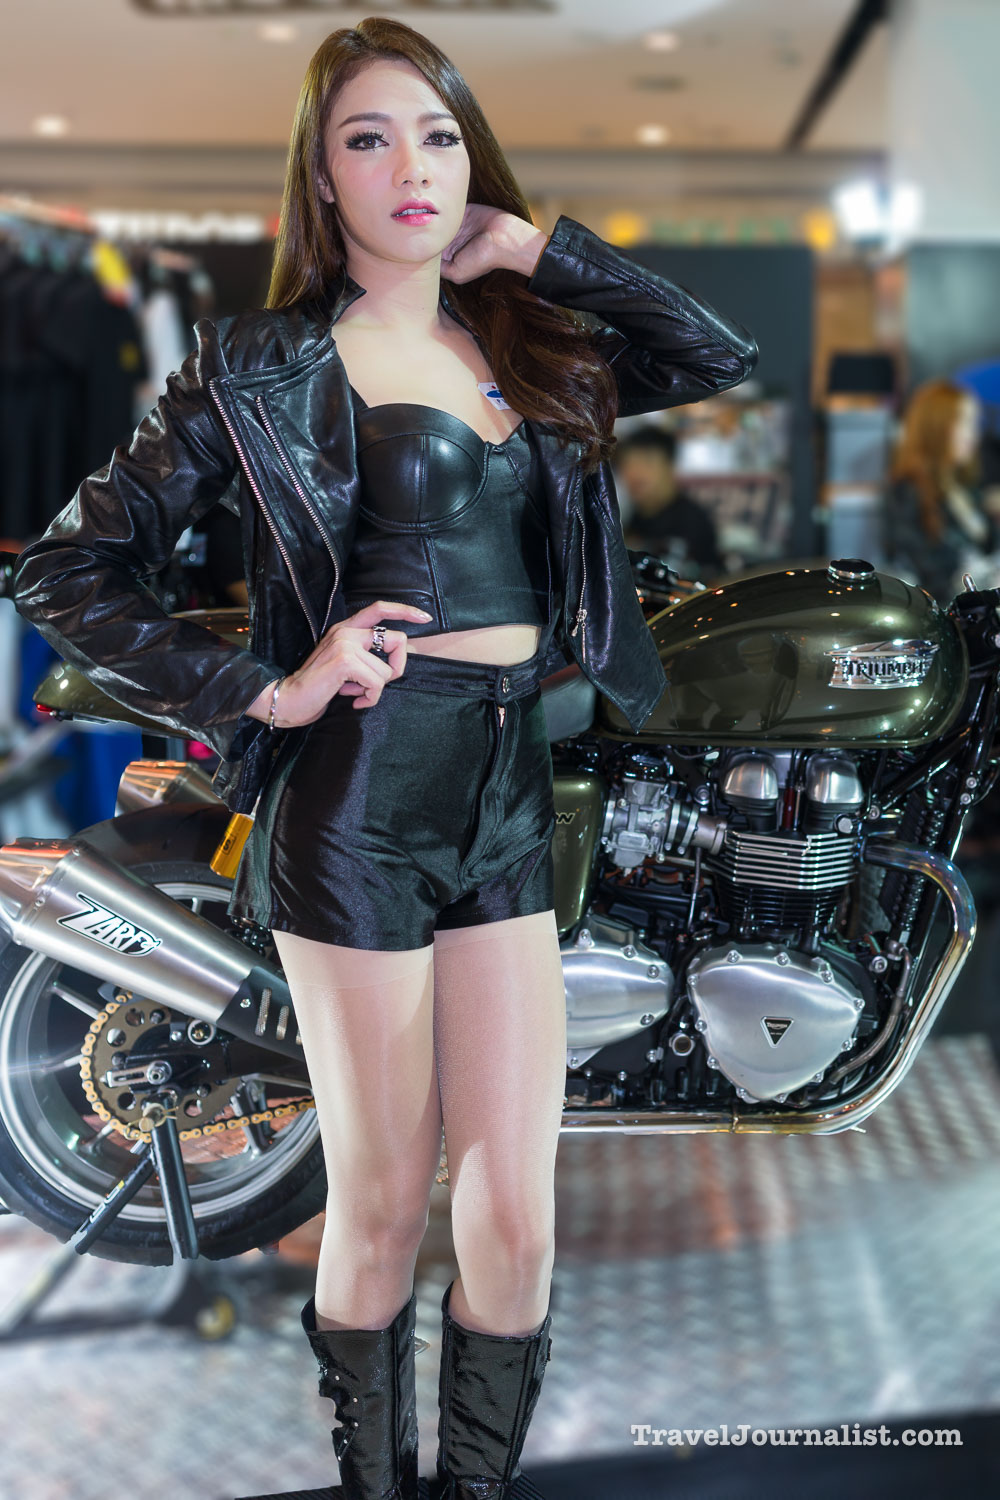 http://traveljournalist.com/wp-content/uploads/2016/02/Motorcycles-Pretty-Asian-Girls-Bangkok-Thailand-6.jpg